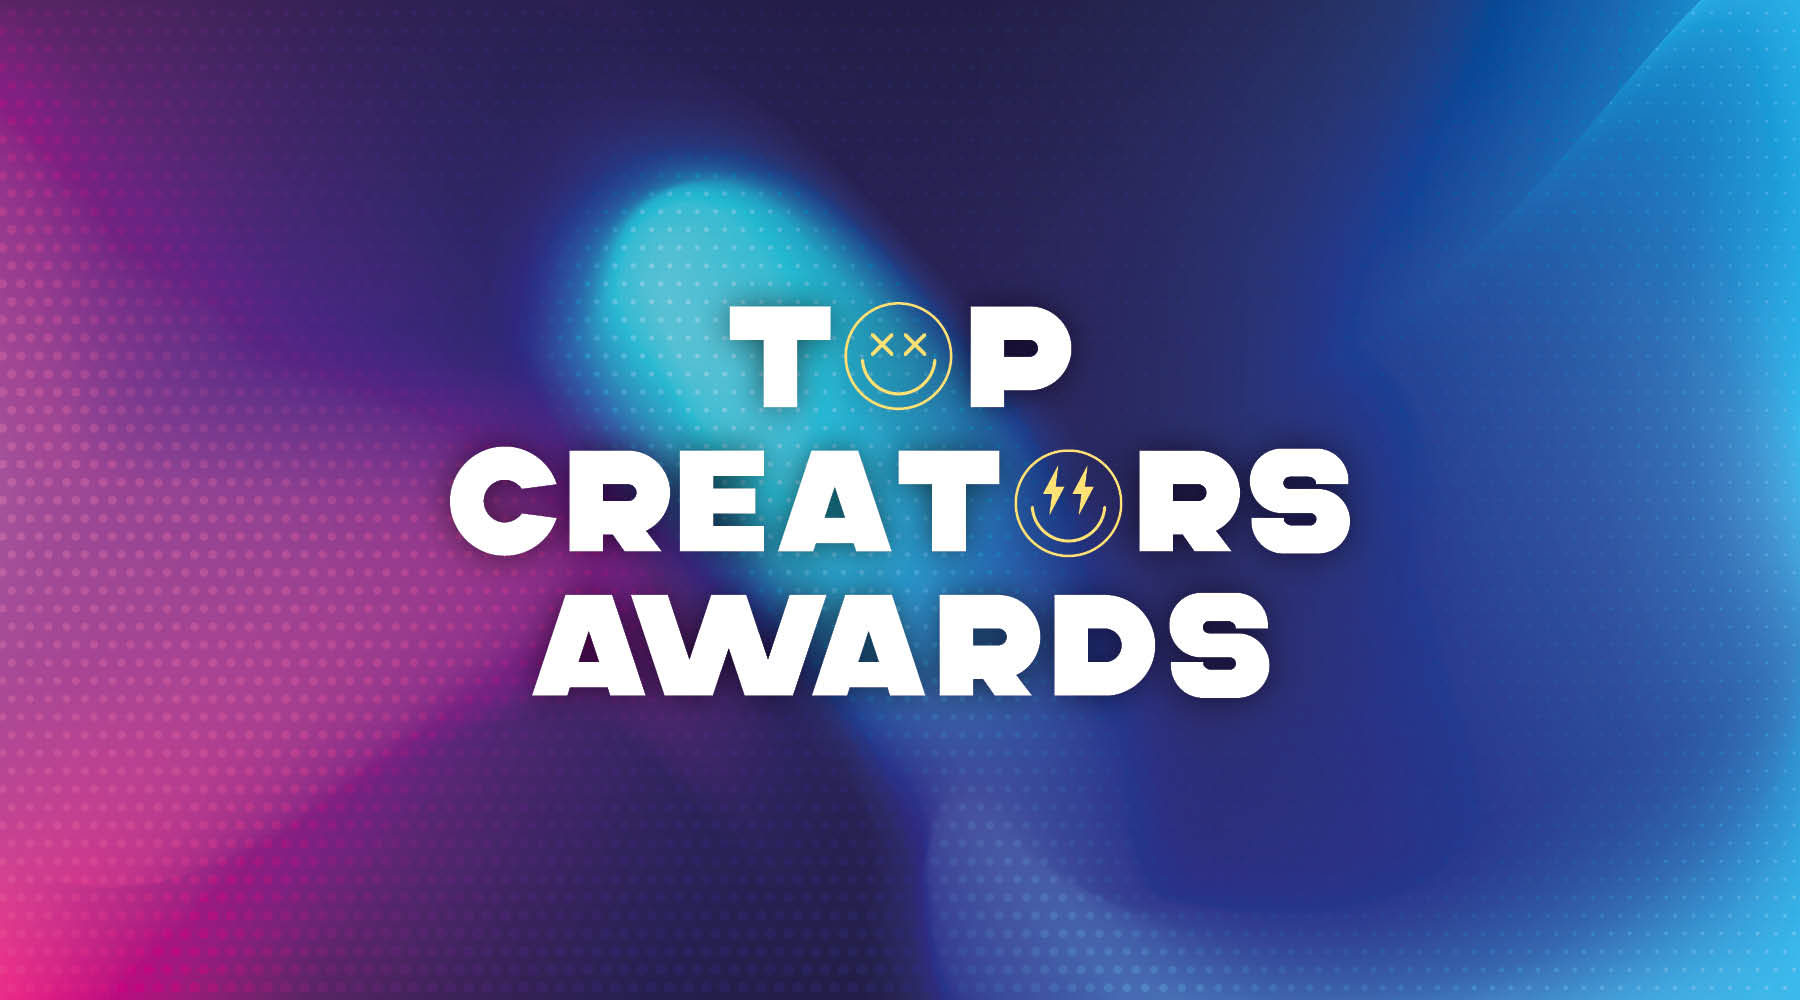 Top Creators Awards